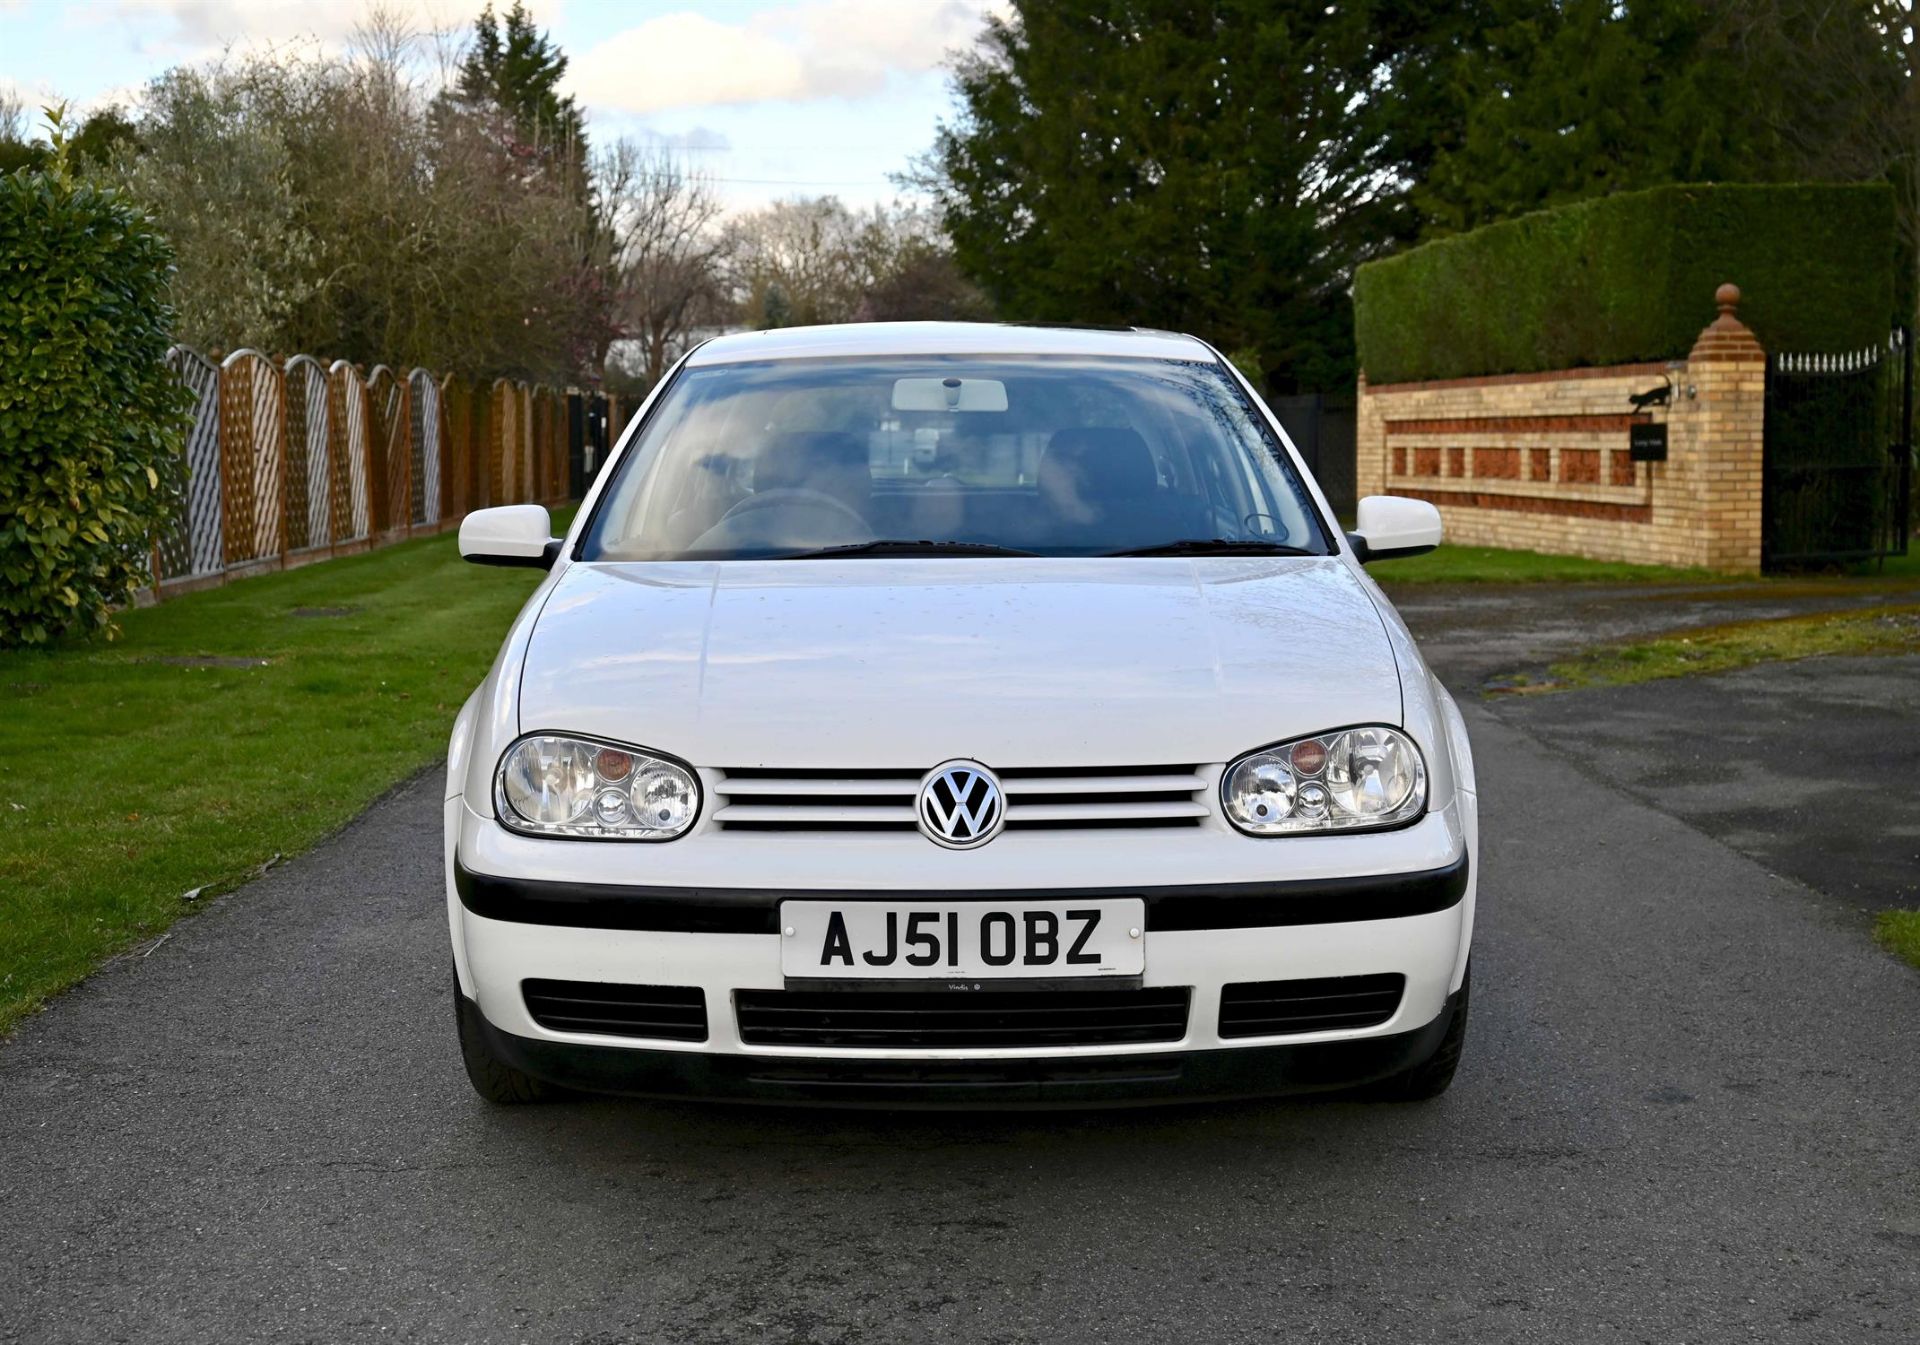 2001 VW Golf 1.6 S Auto 5-door Hatchback. Registration number AJ51 OBZ. White with black cloth - Image 3 of 14